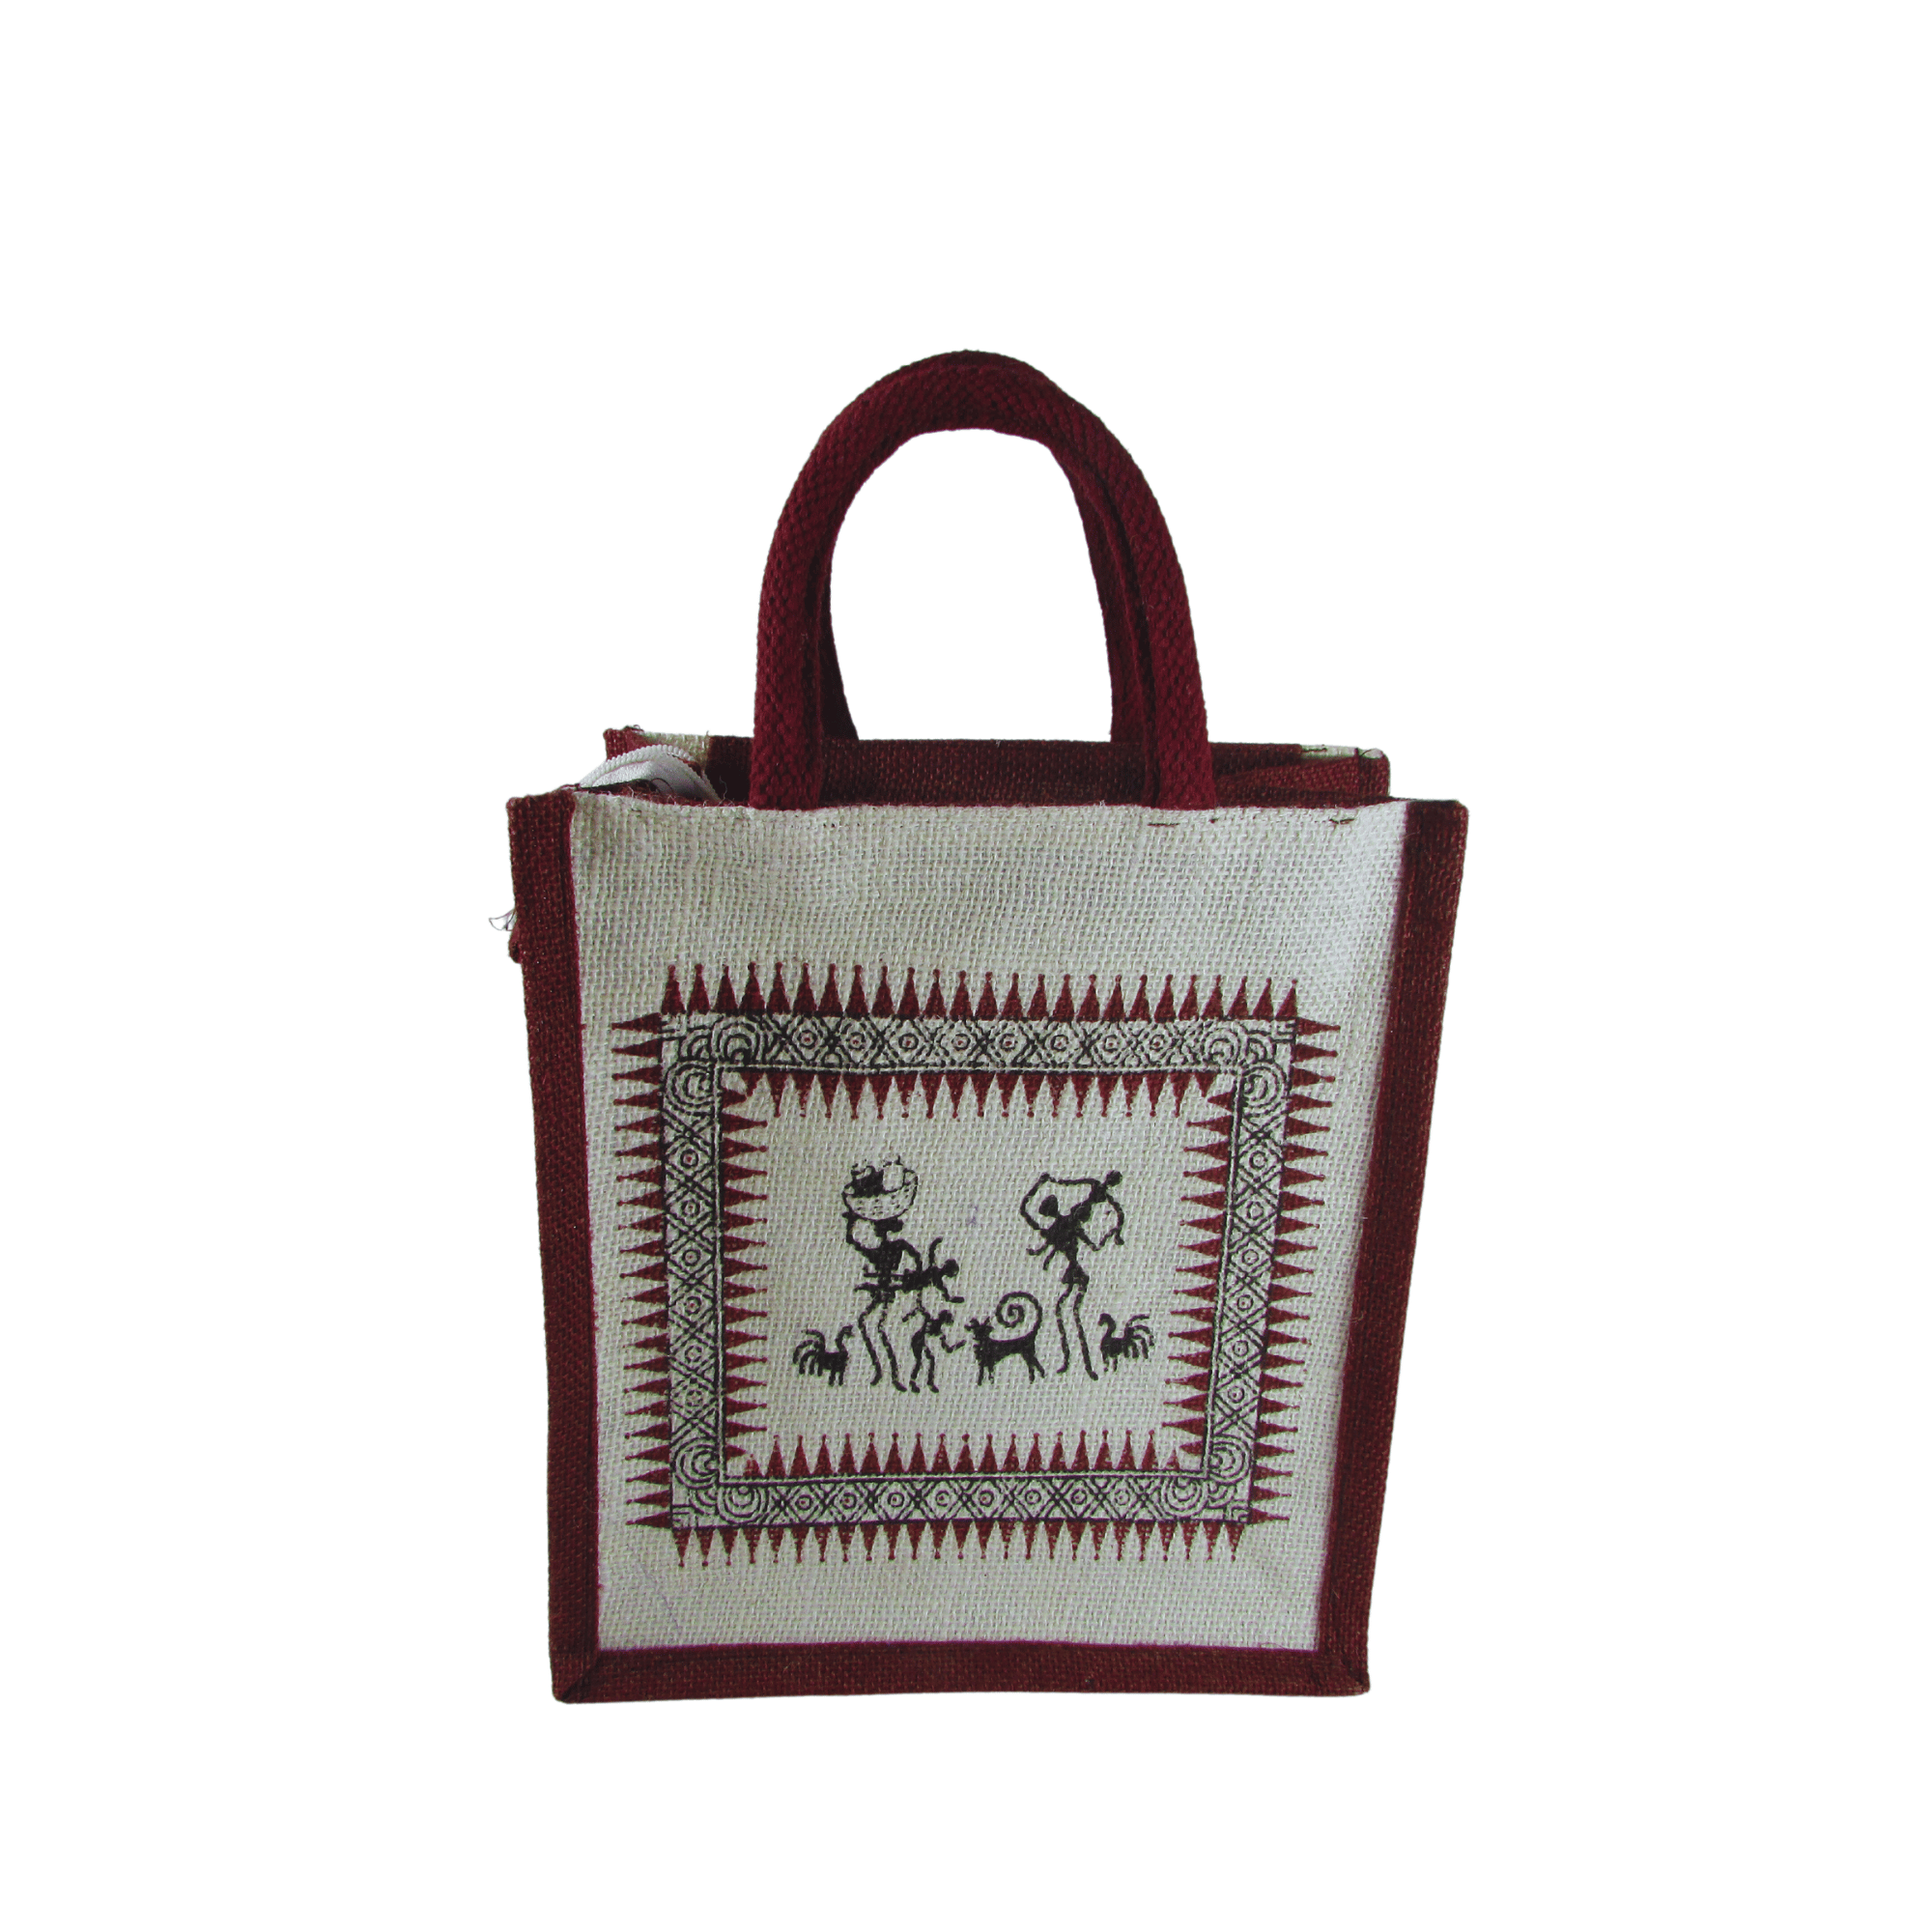 Inbag Jute Bag (Adivasi) for Lunch Box, Go Green MultiPurpose Jute